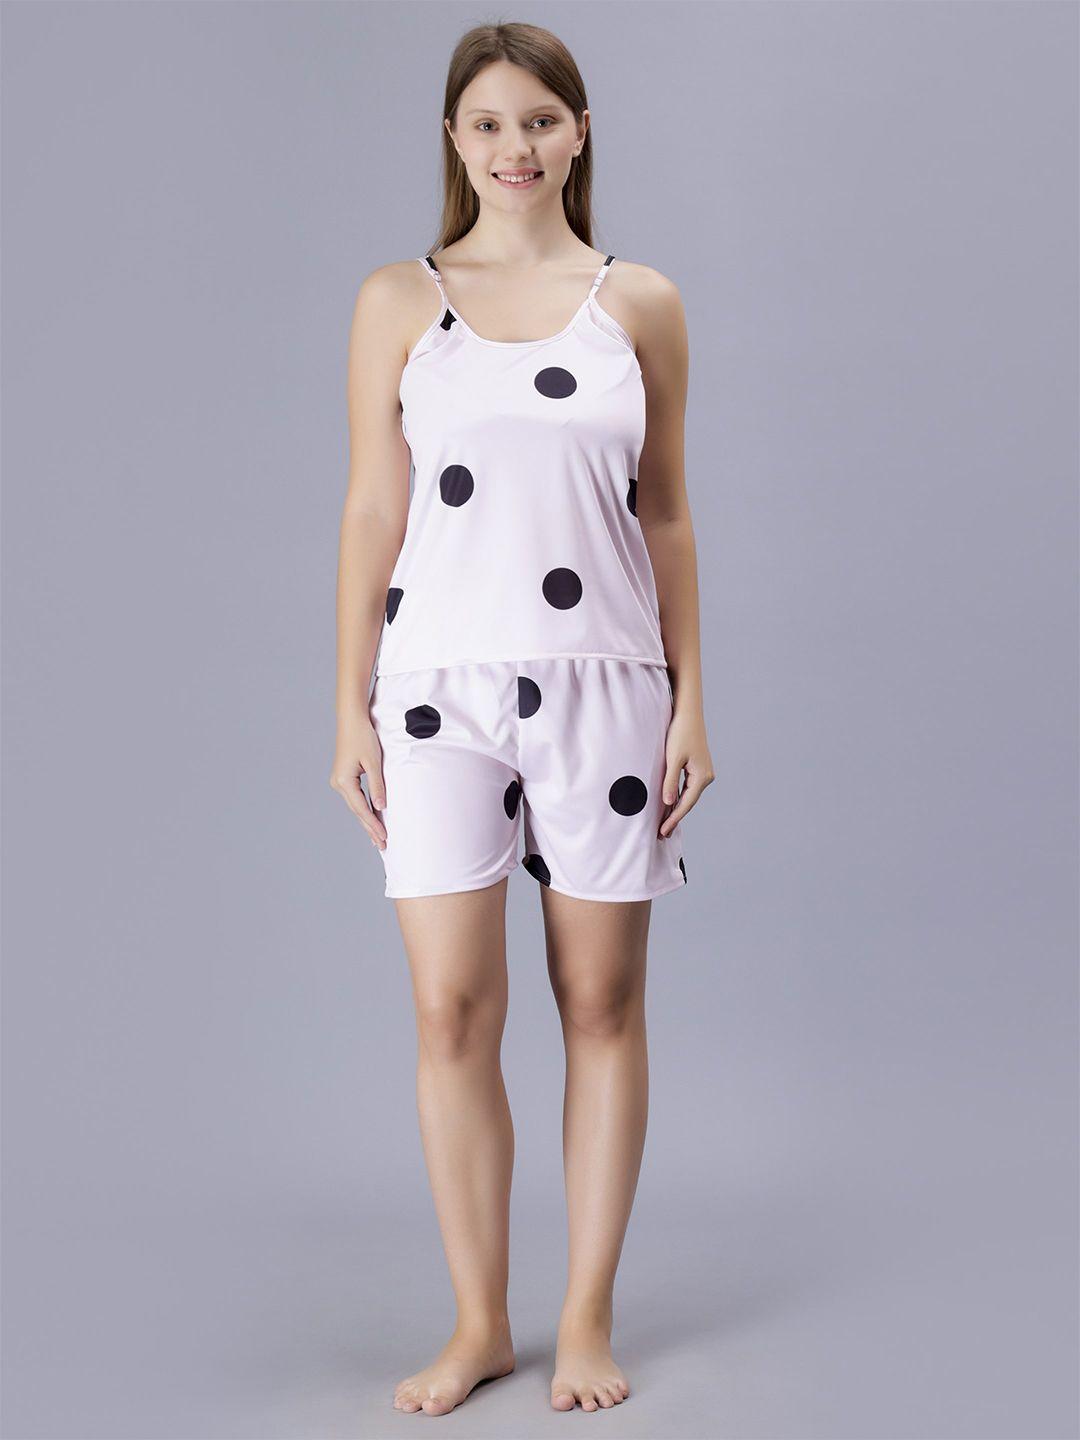 xpiox polka dot printed night suit